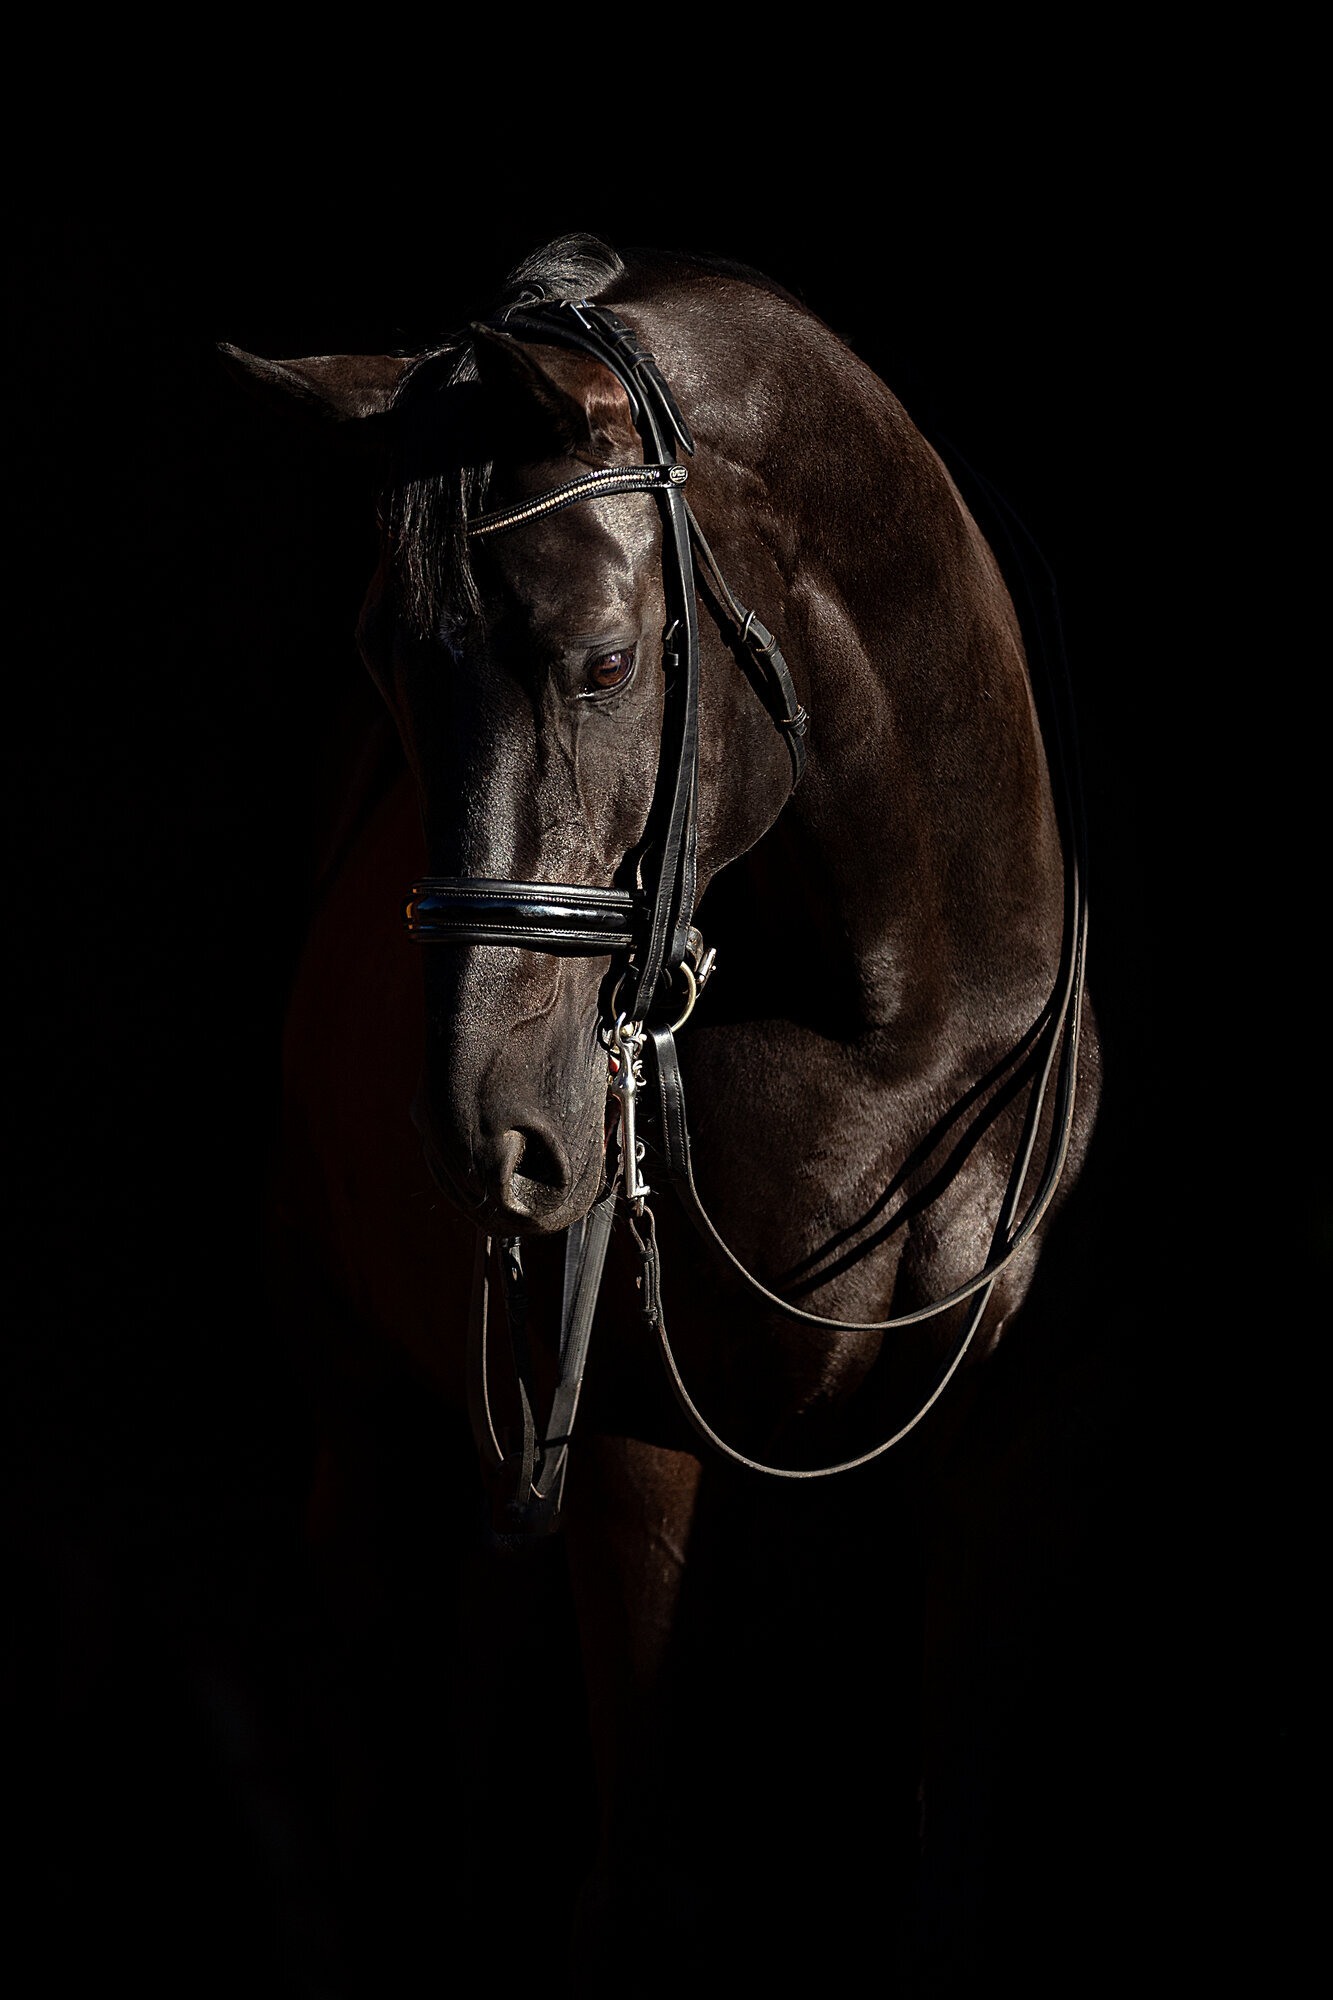 Bilder Pferdefotografie Ingrid Feuerecker